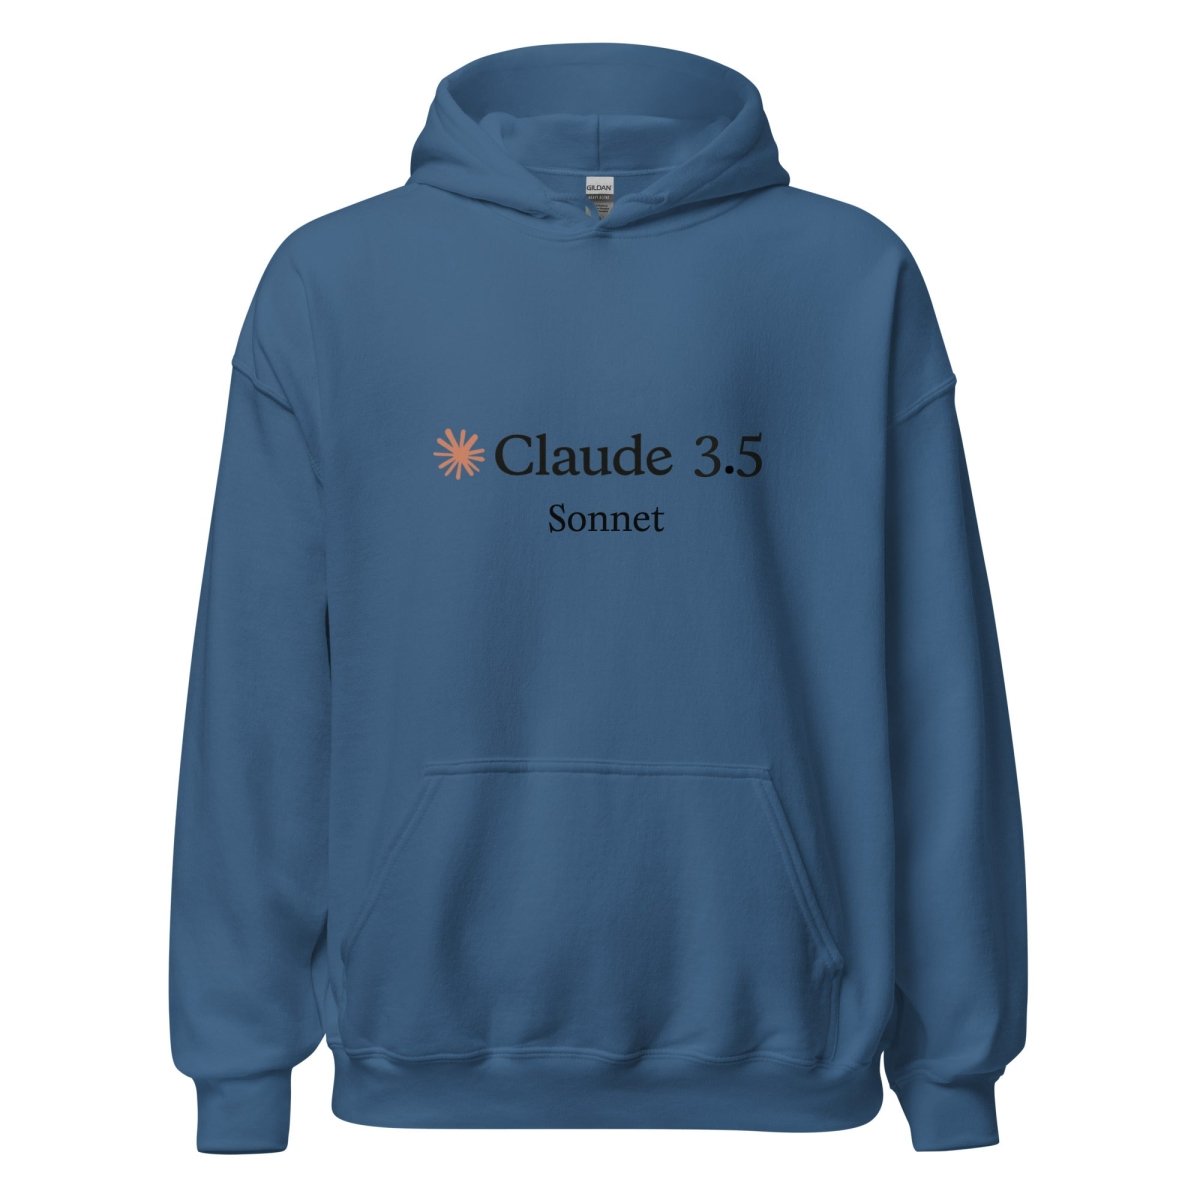 Claude 3.5 Sonnet Hoodie (unisex) - Indigo Blue - AI Store